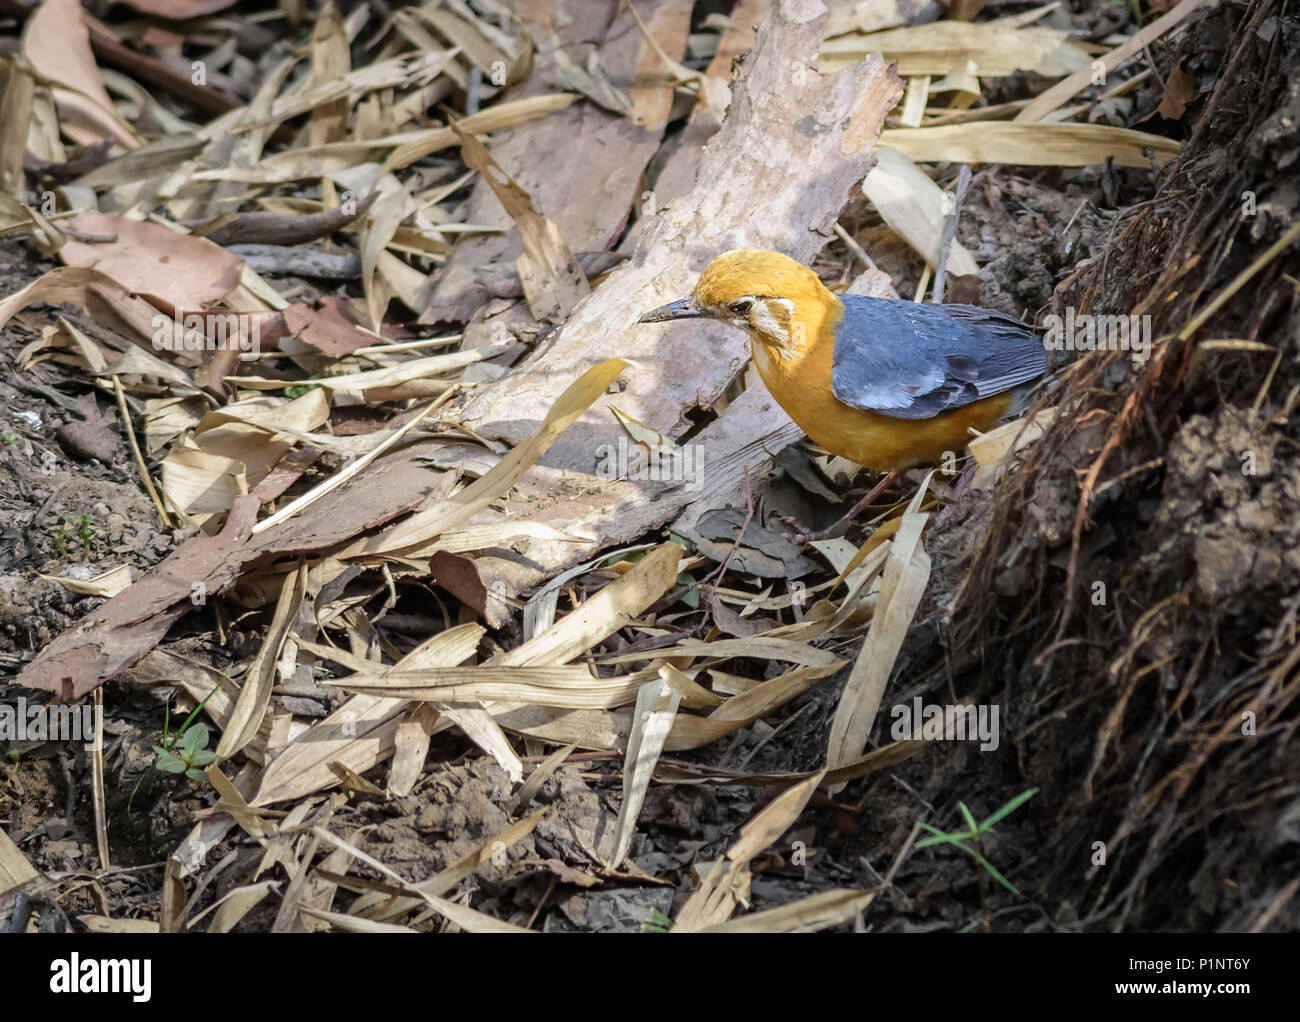 Small colorful bird, Orange-headed Thrush, Geokichla citrina feeding on ground Stock Photo